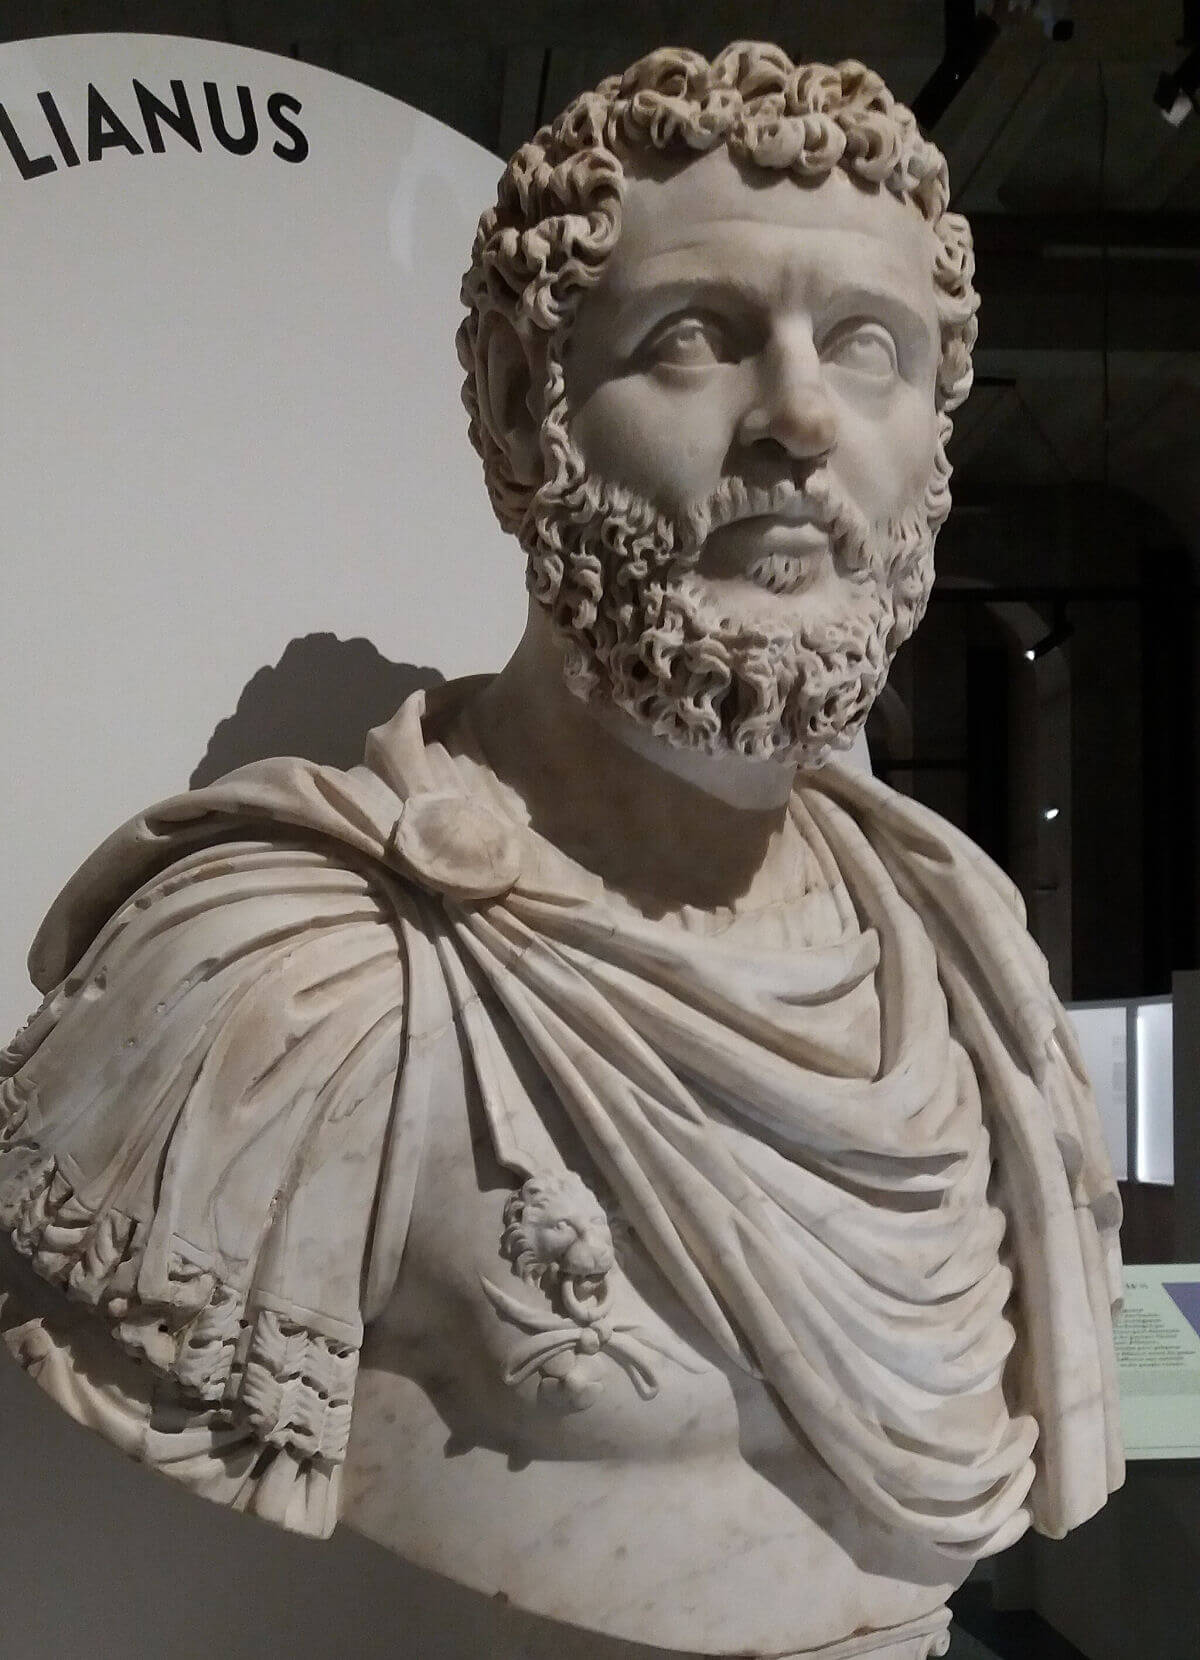 A bust of the Roman emperor Didius Julianus